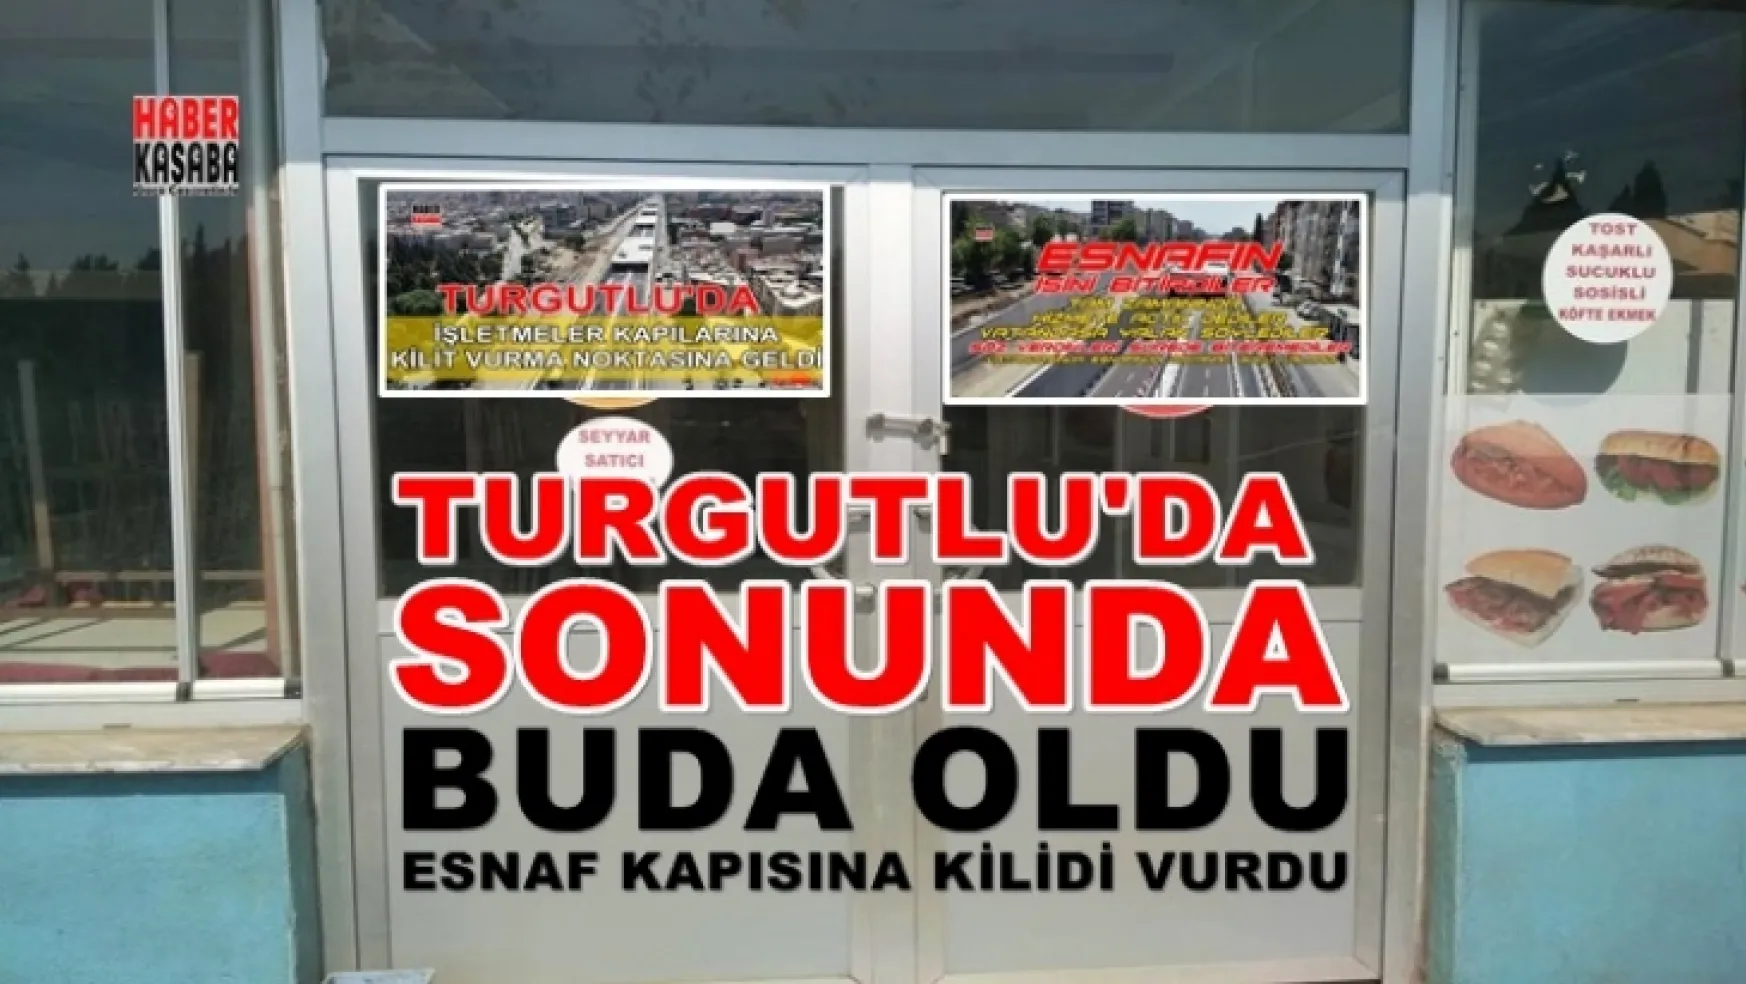 Turgutlu'da Esnaf Kapısına Kilidi vurdu?